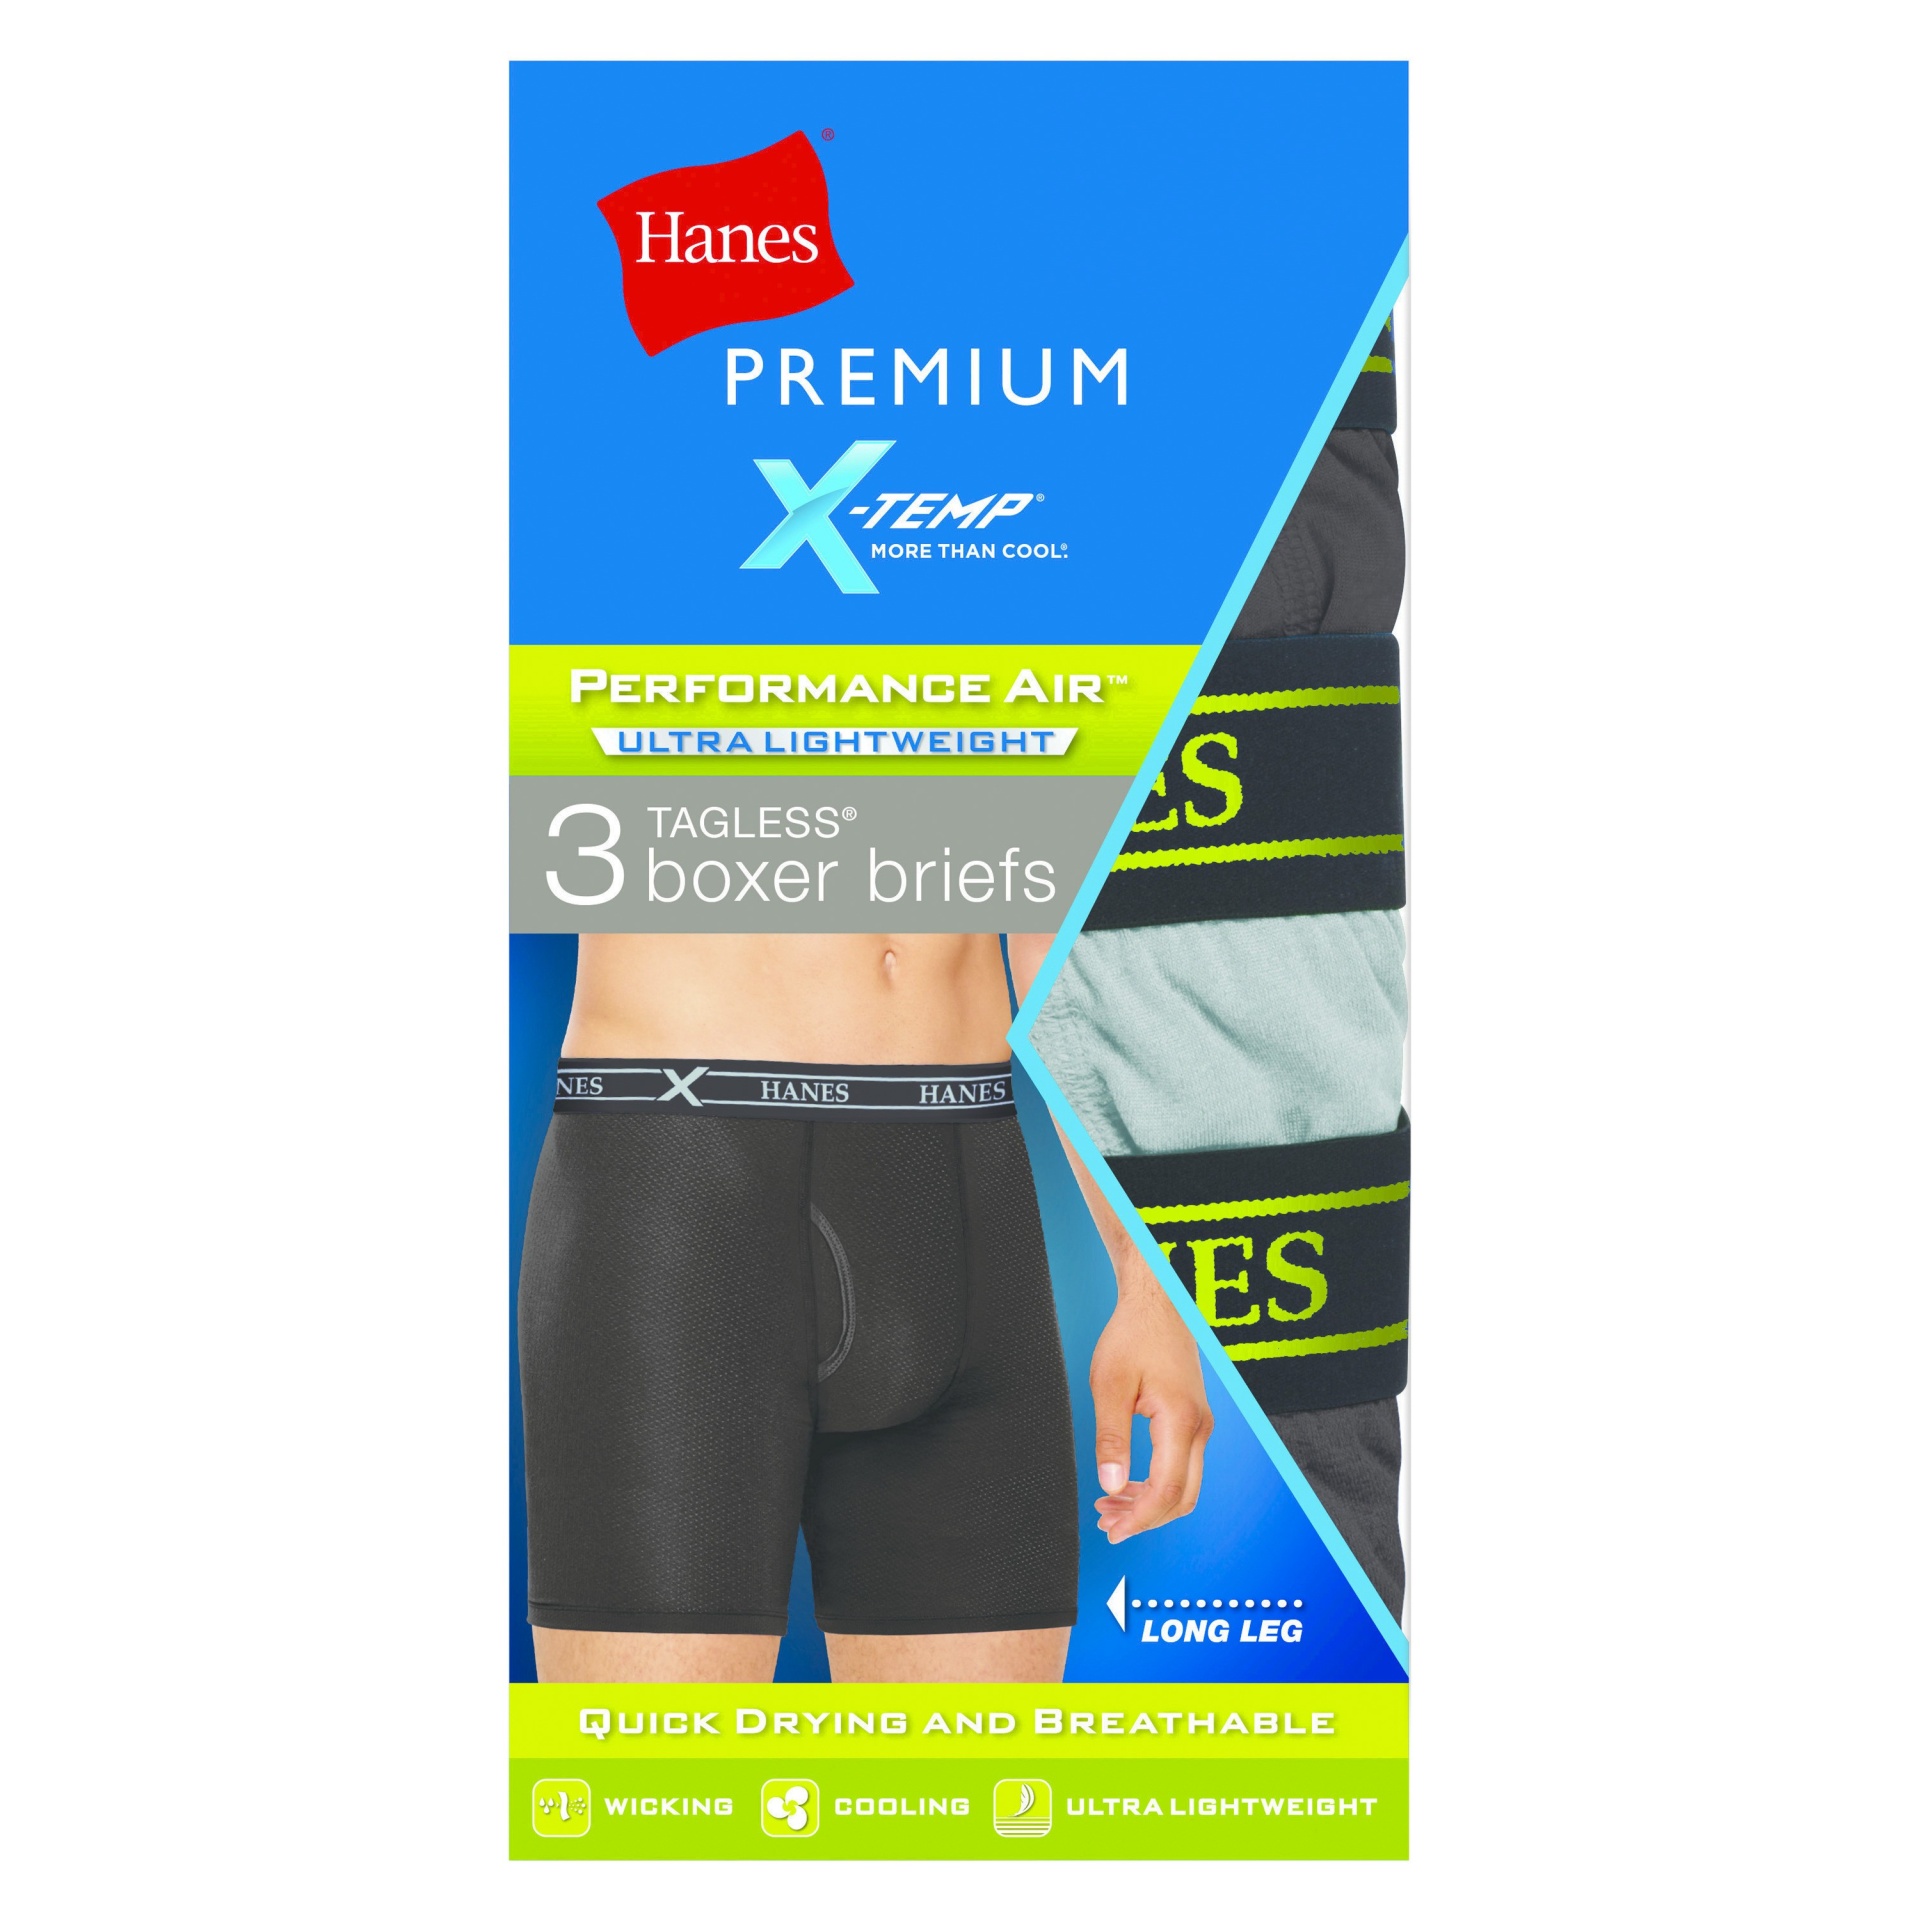 Hanes Premium Men's Performance Ultralight Boxer Briefs Colors